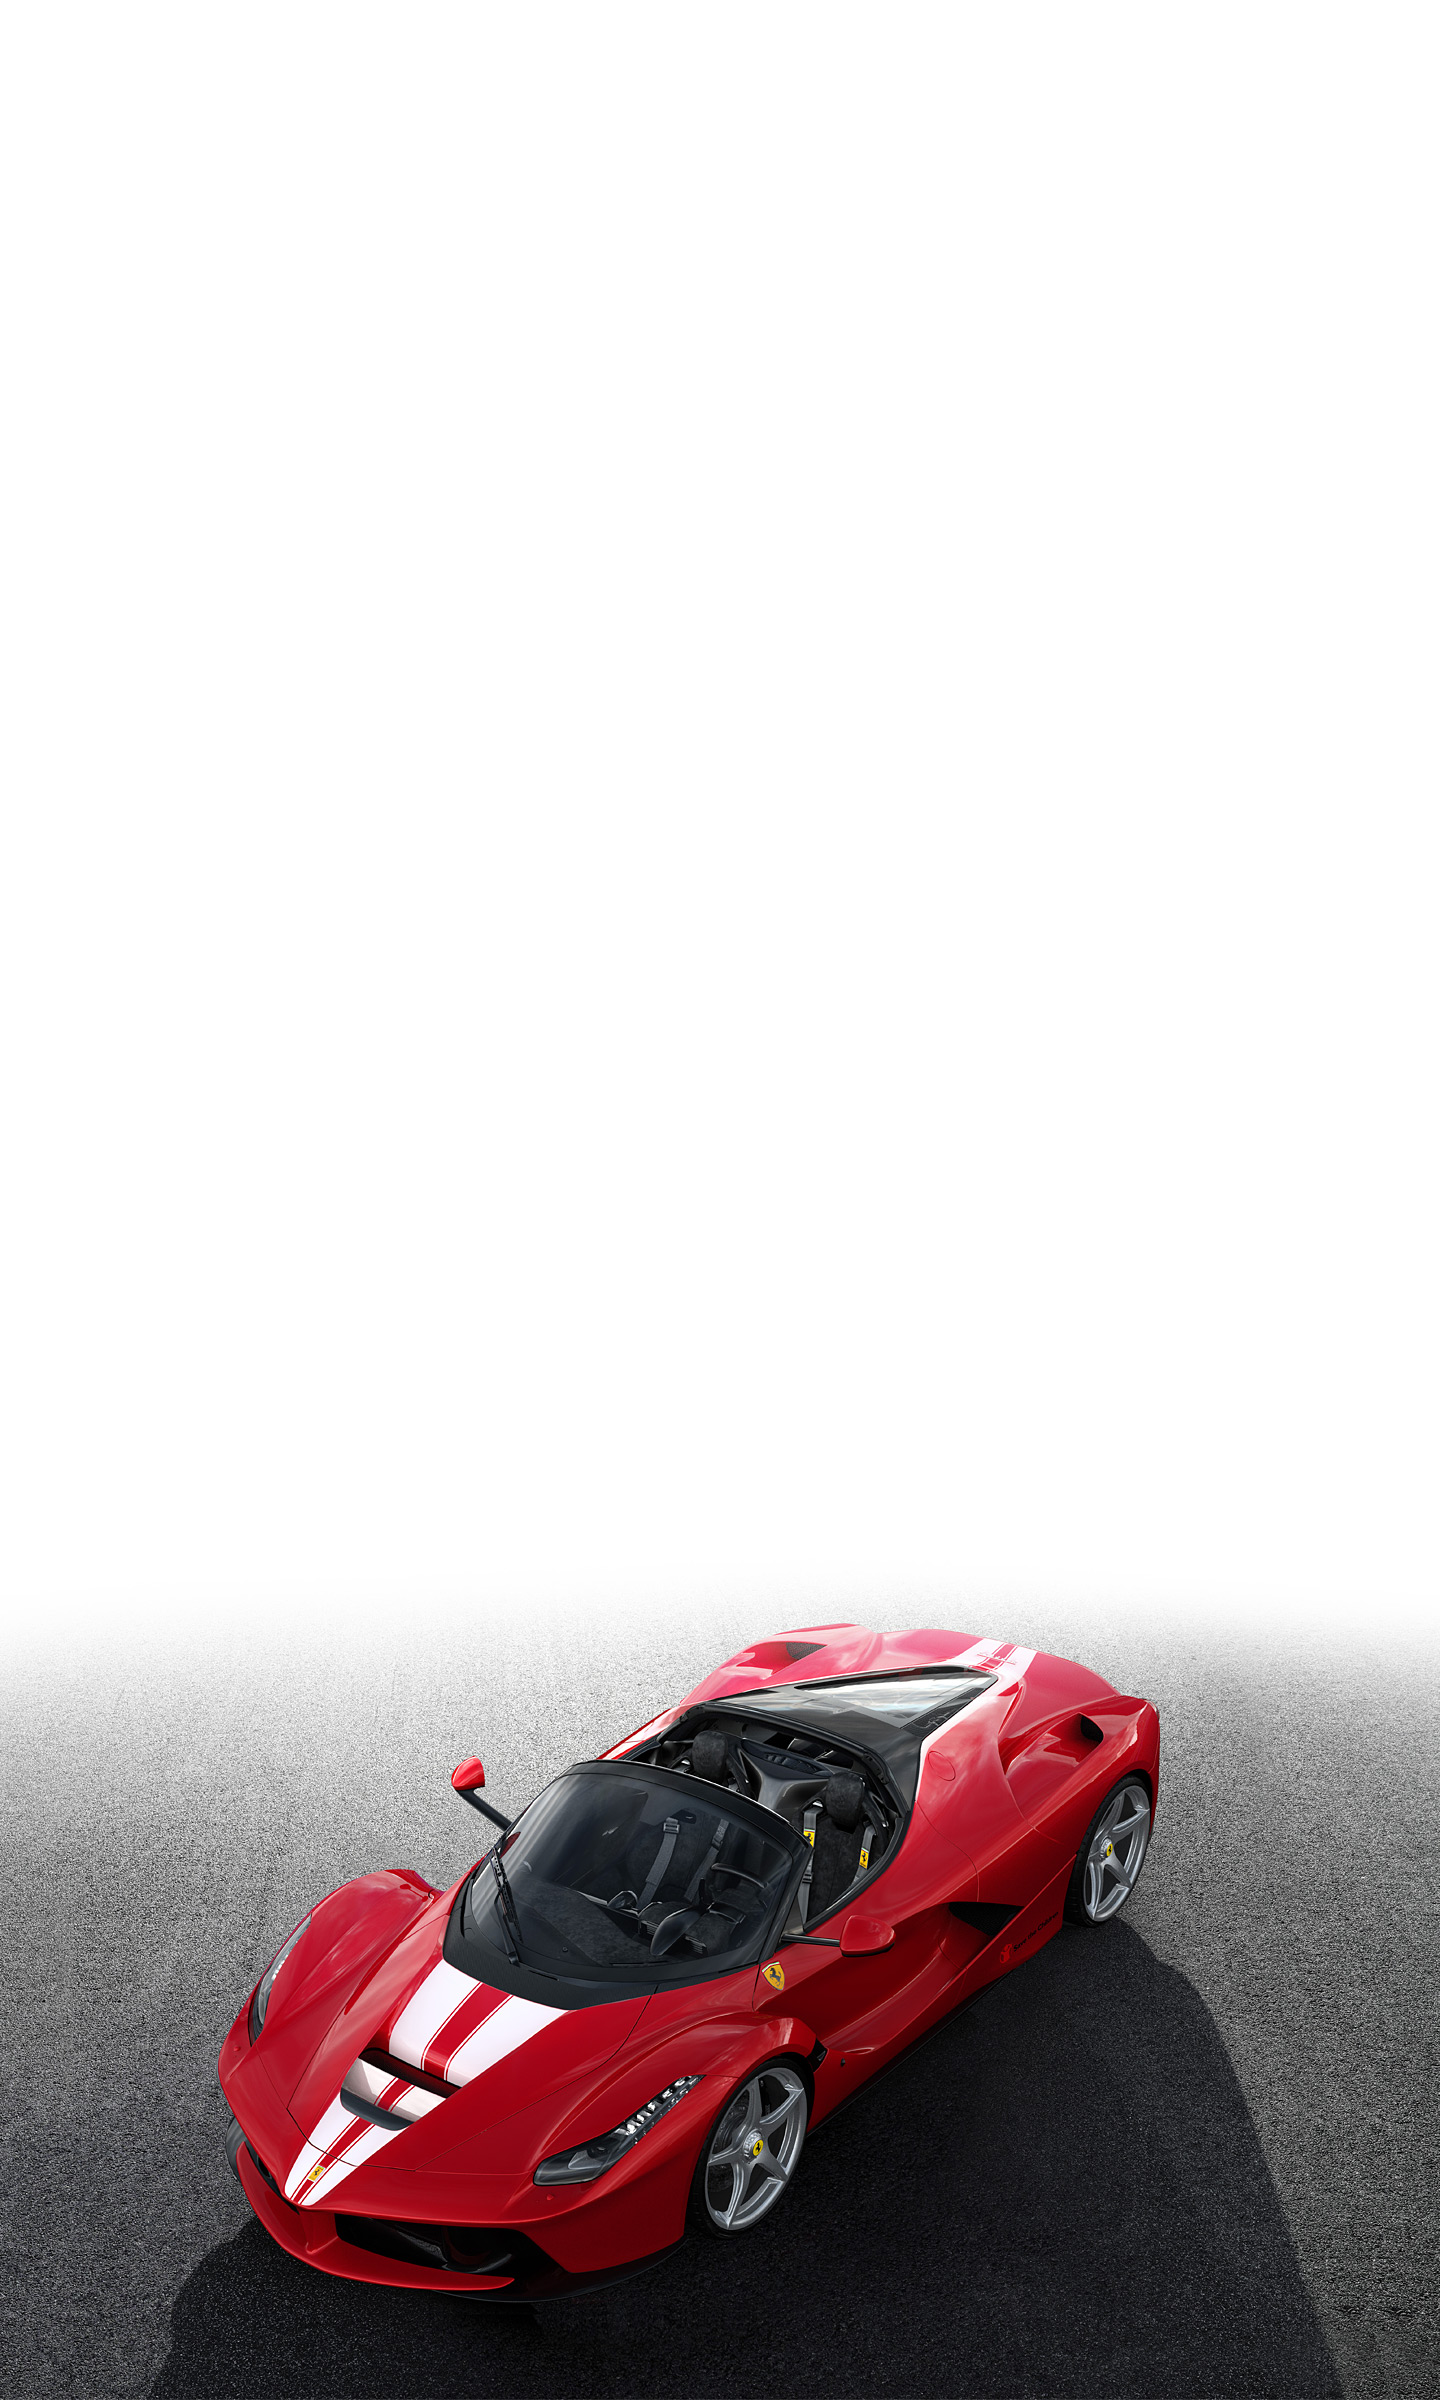  2017 Ferrari LaFerrari Aperta Wallpaper.